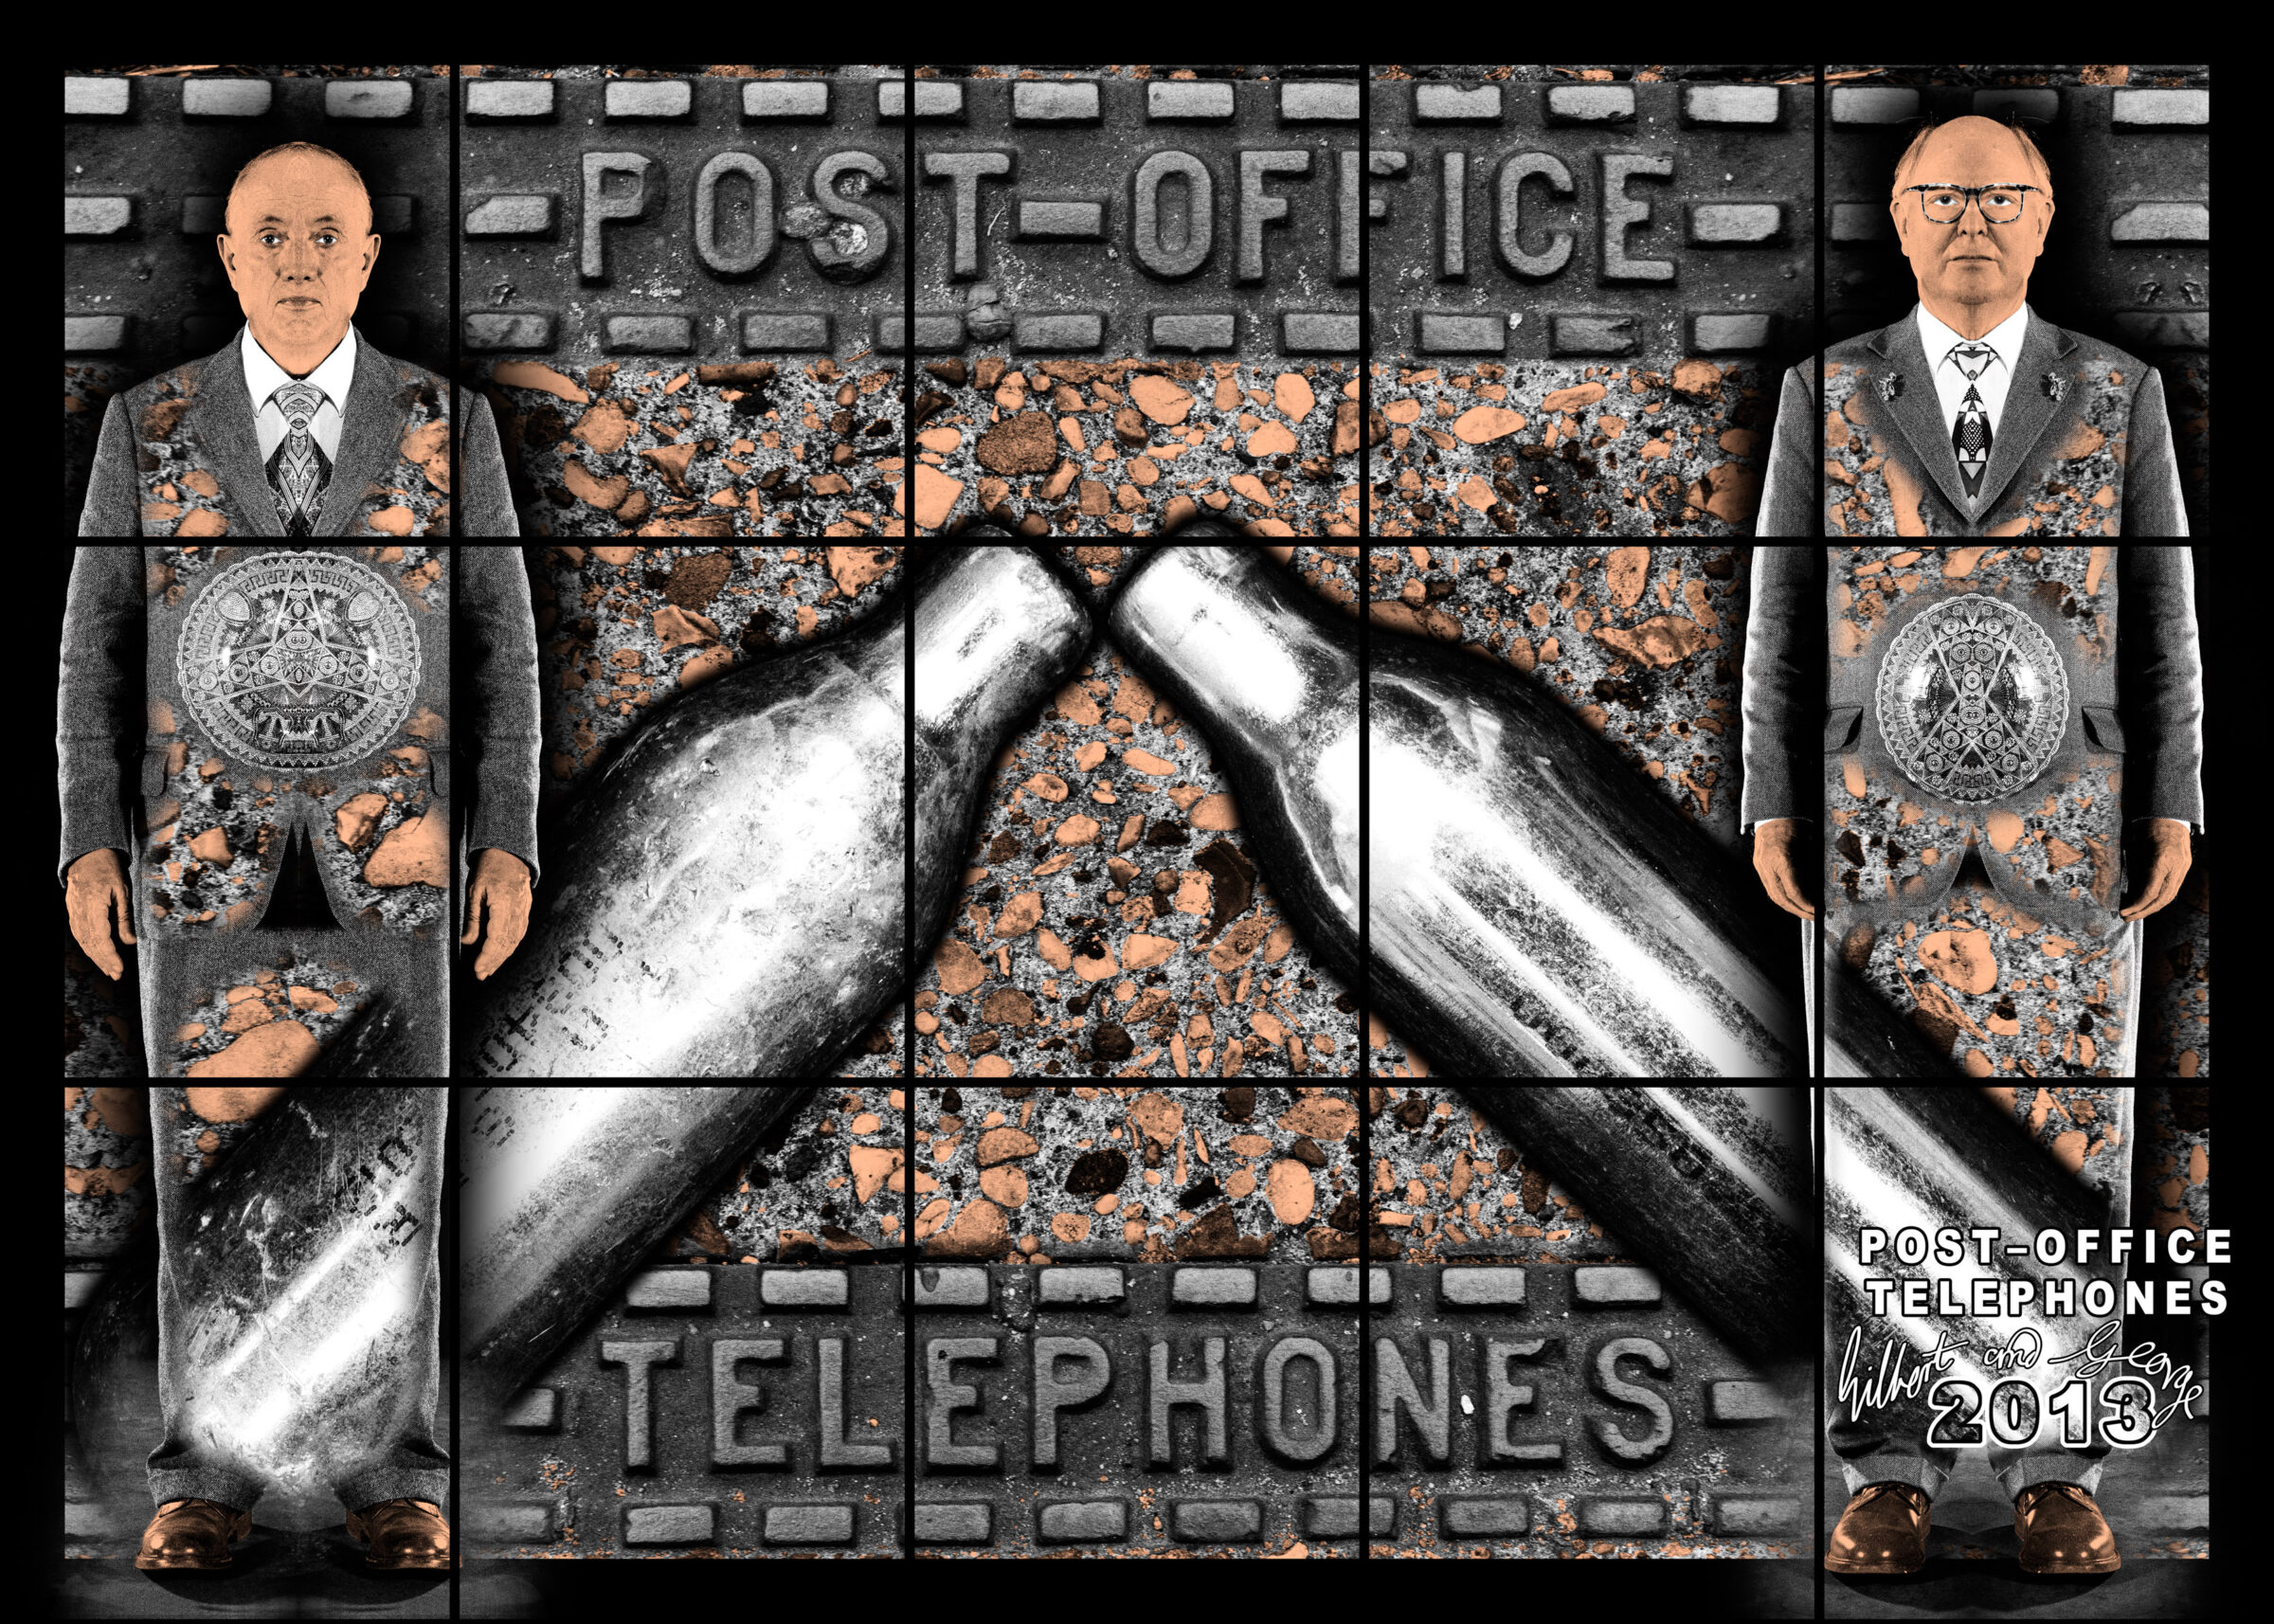 2013 POST-OFFICE TELEPHONES